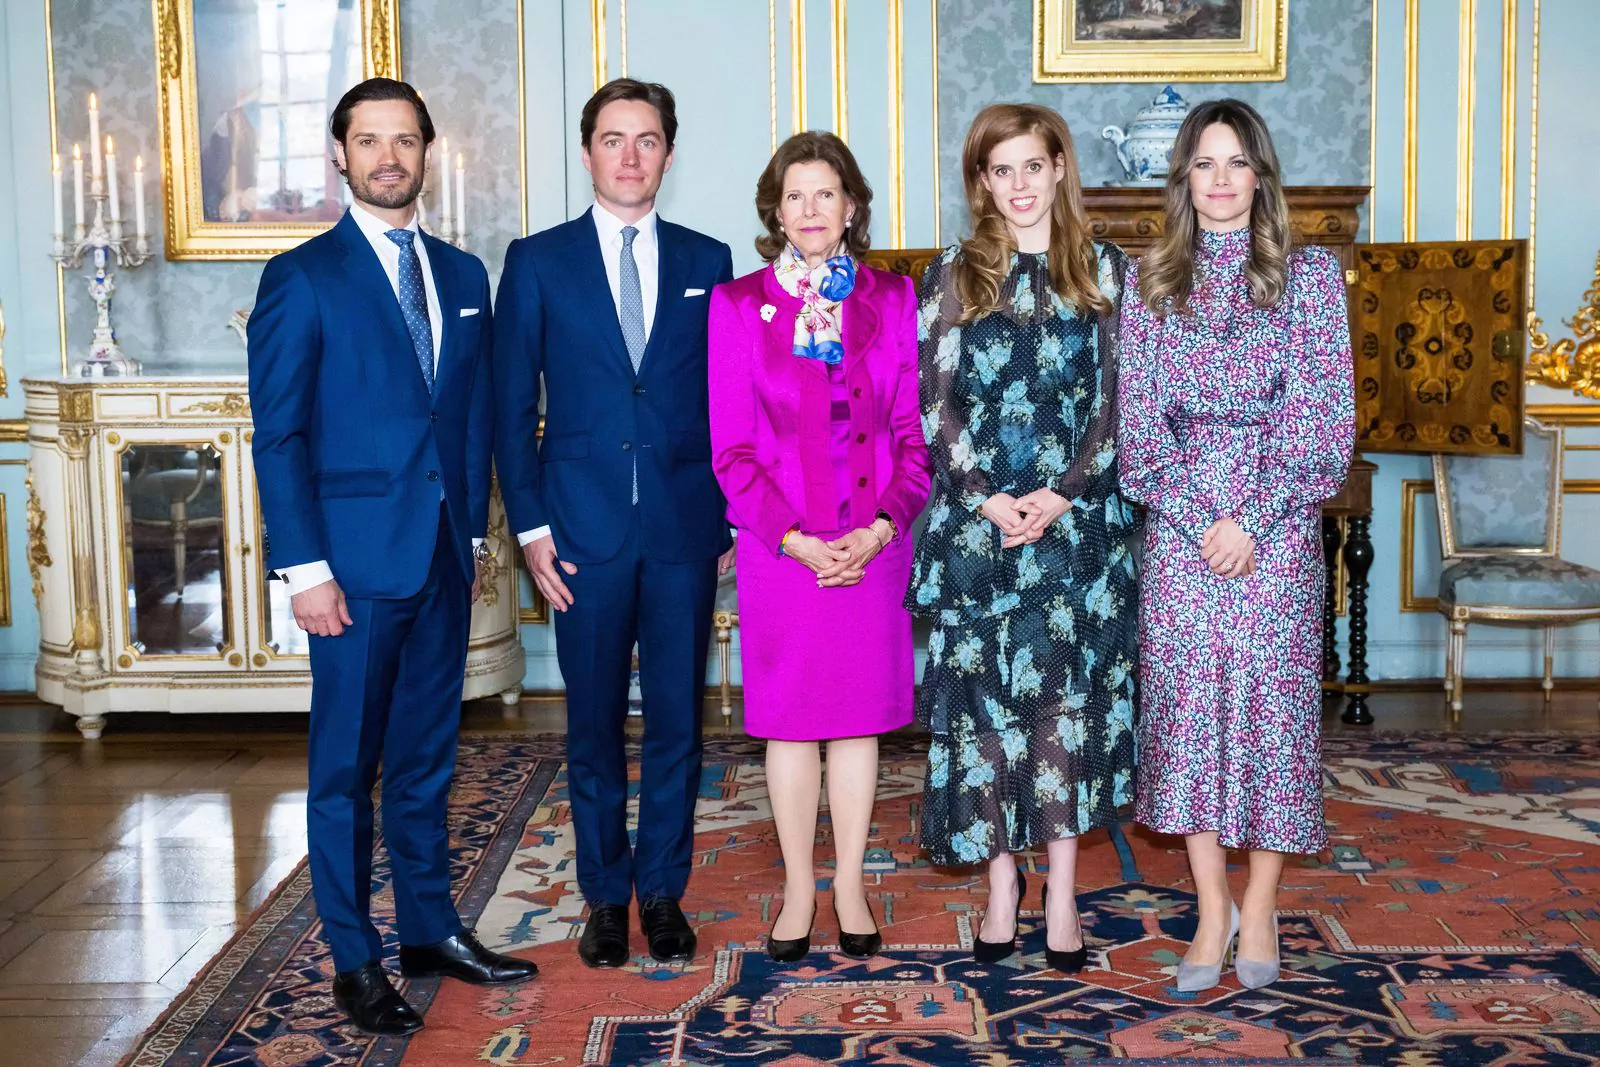 Принц Карл Филипп, Эдоардо Мапелли Моцци, королева Сильвия, принцесса Беатрис Йоркская, принцесса София